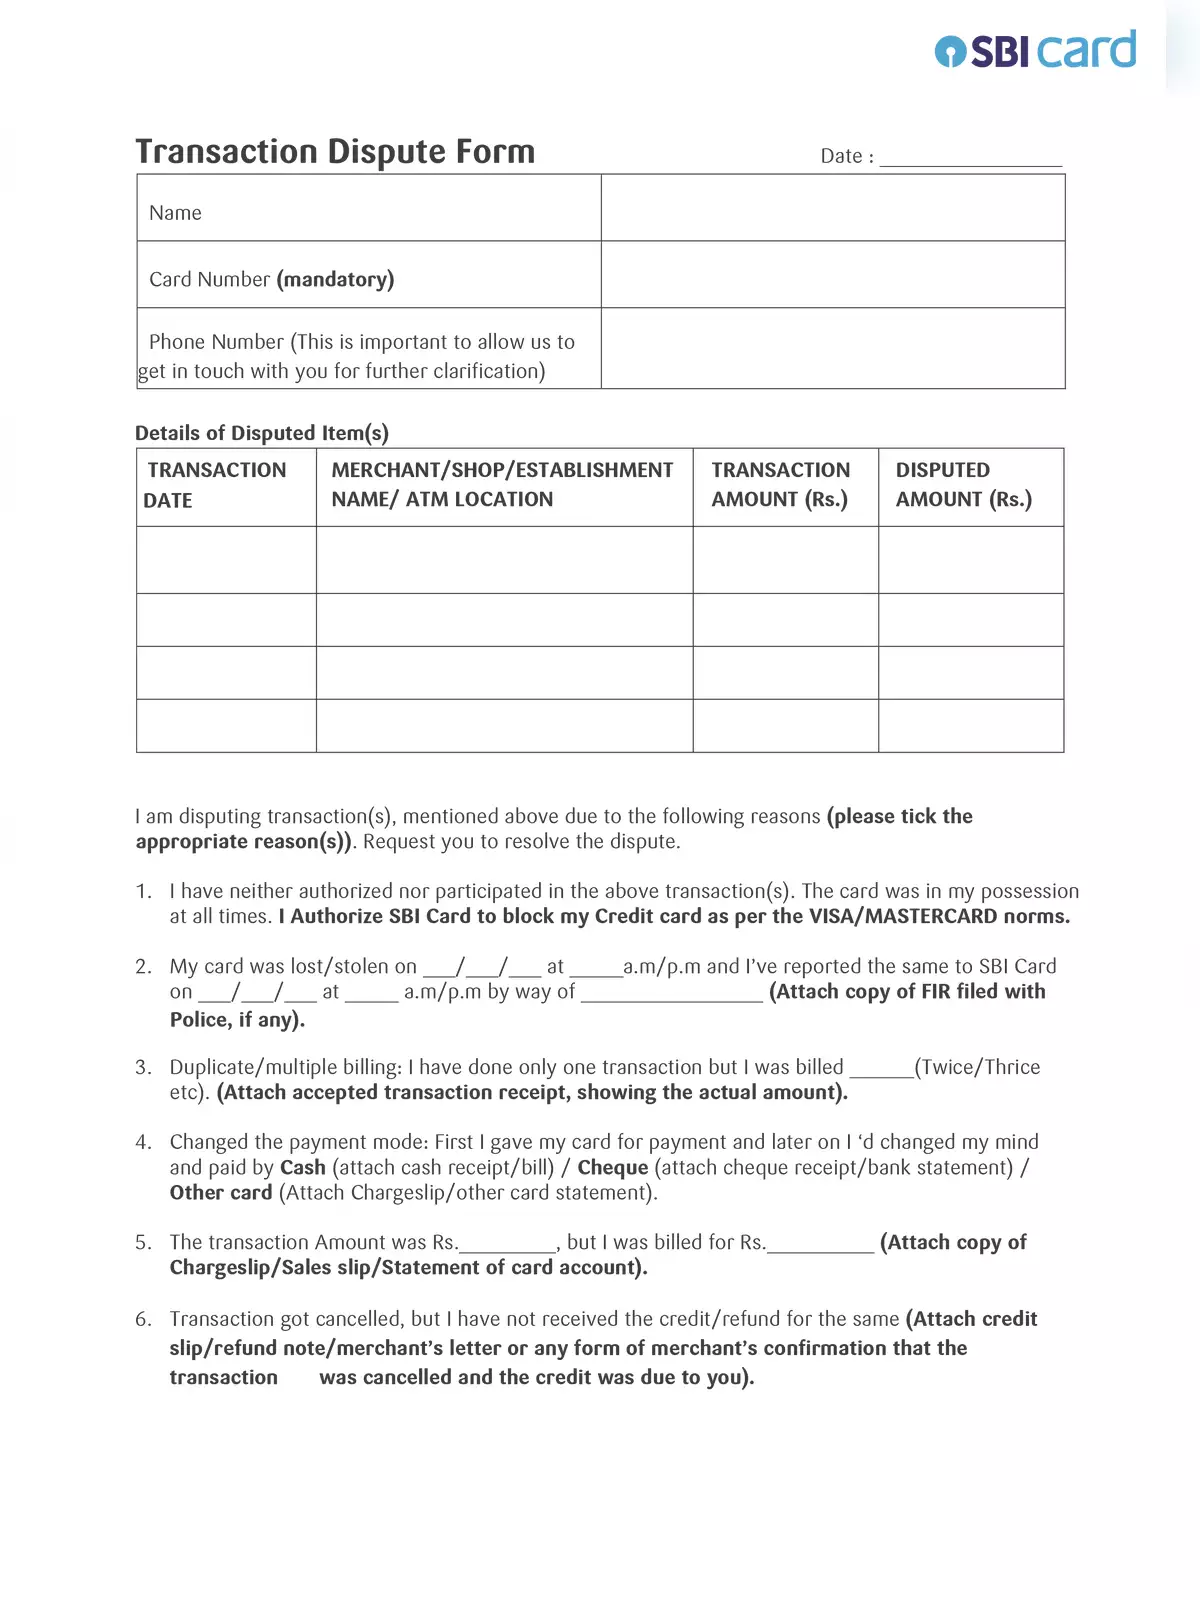 SBI Transaction Dispute Form